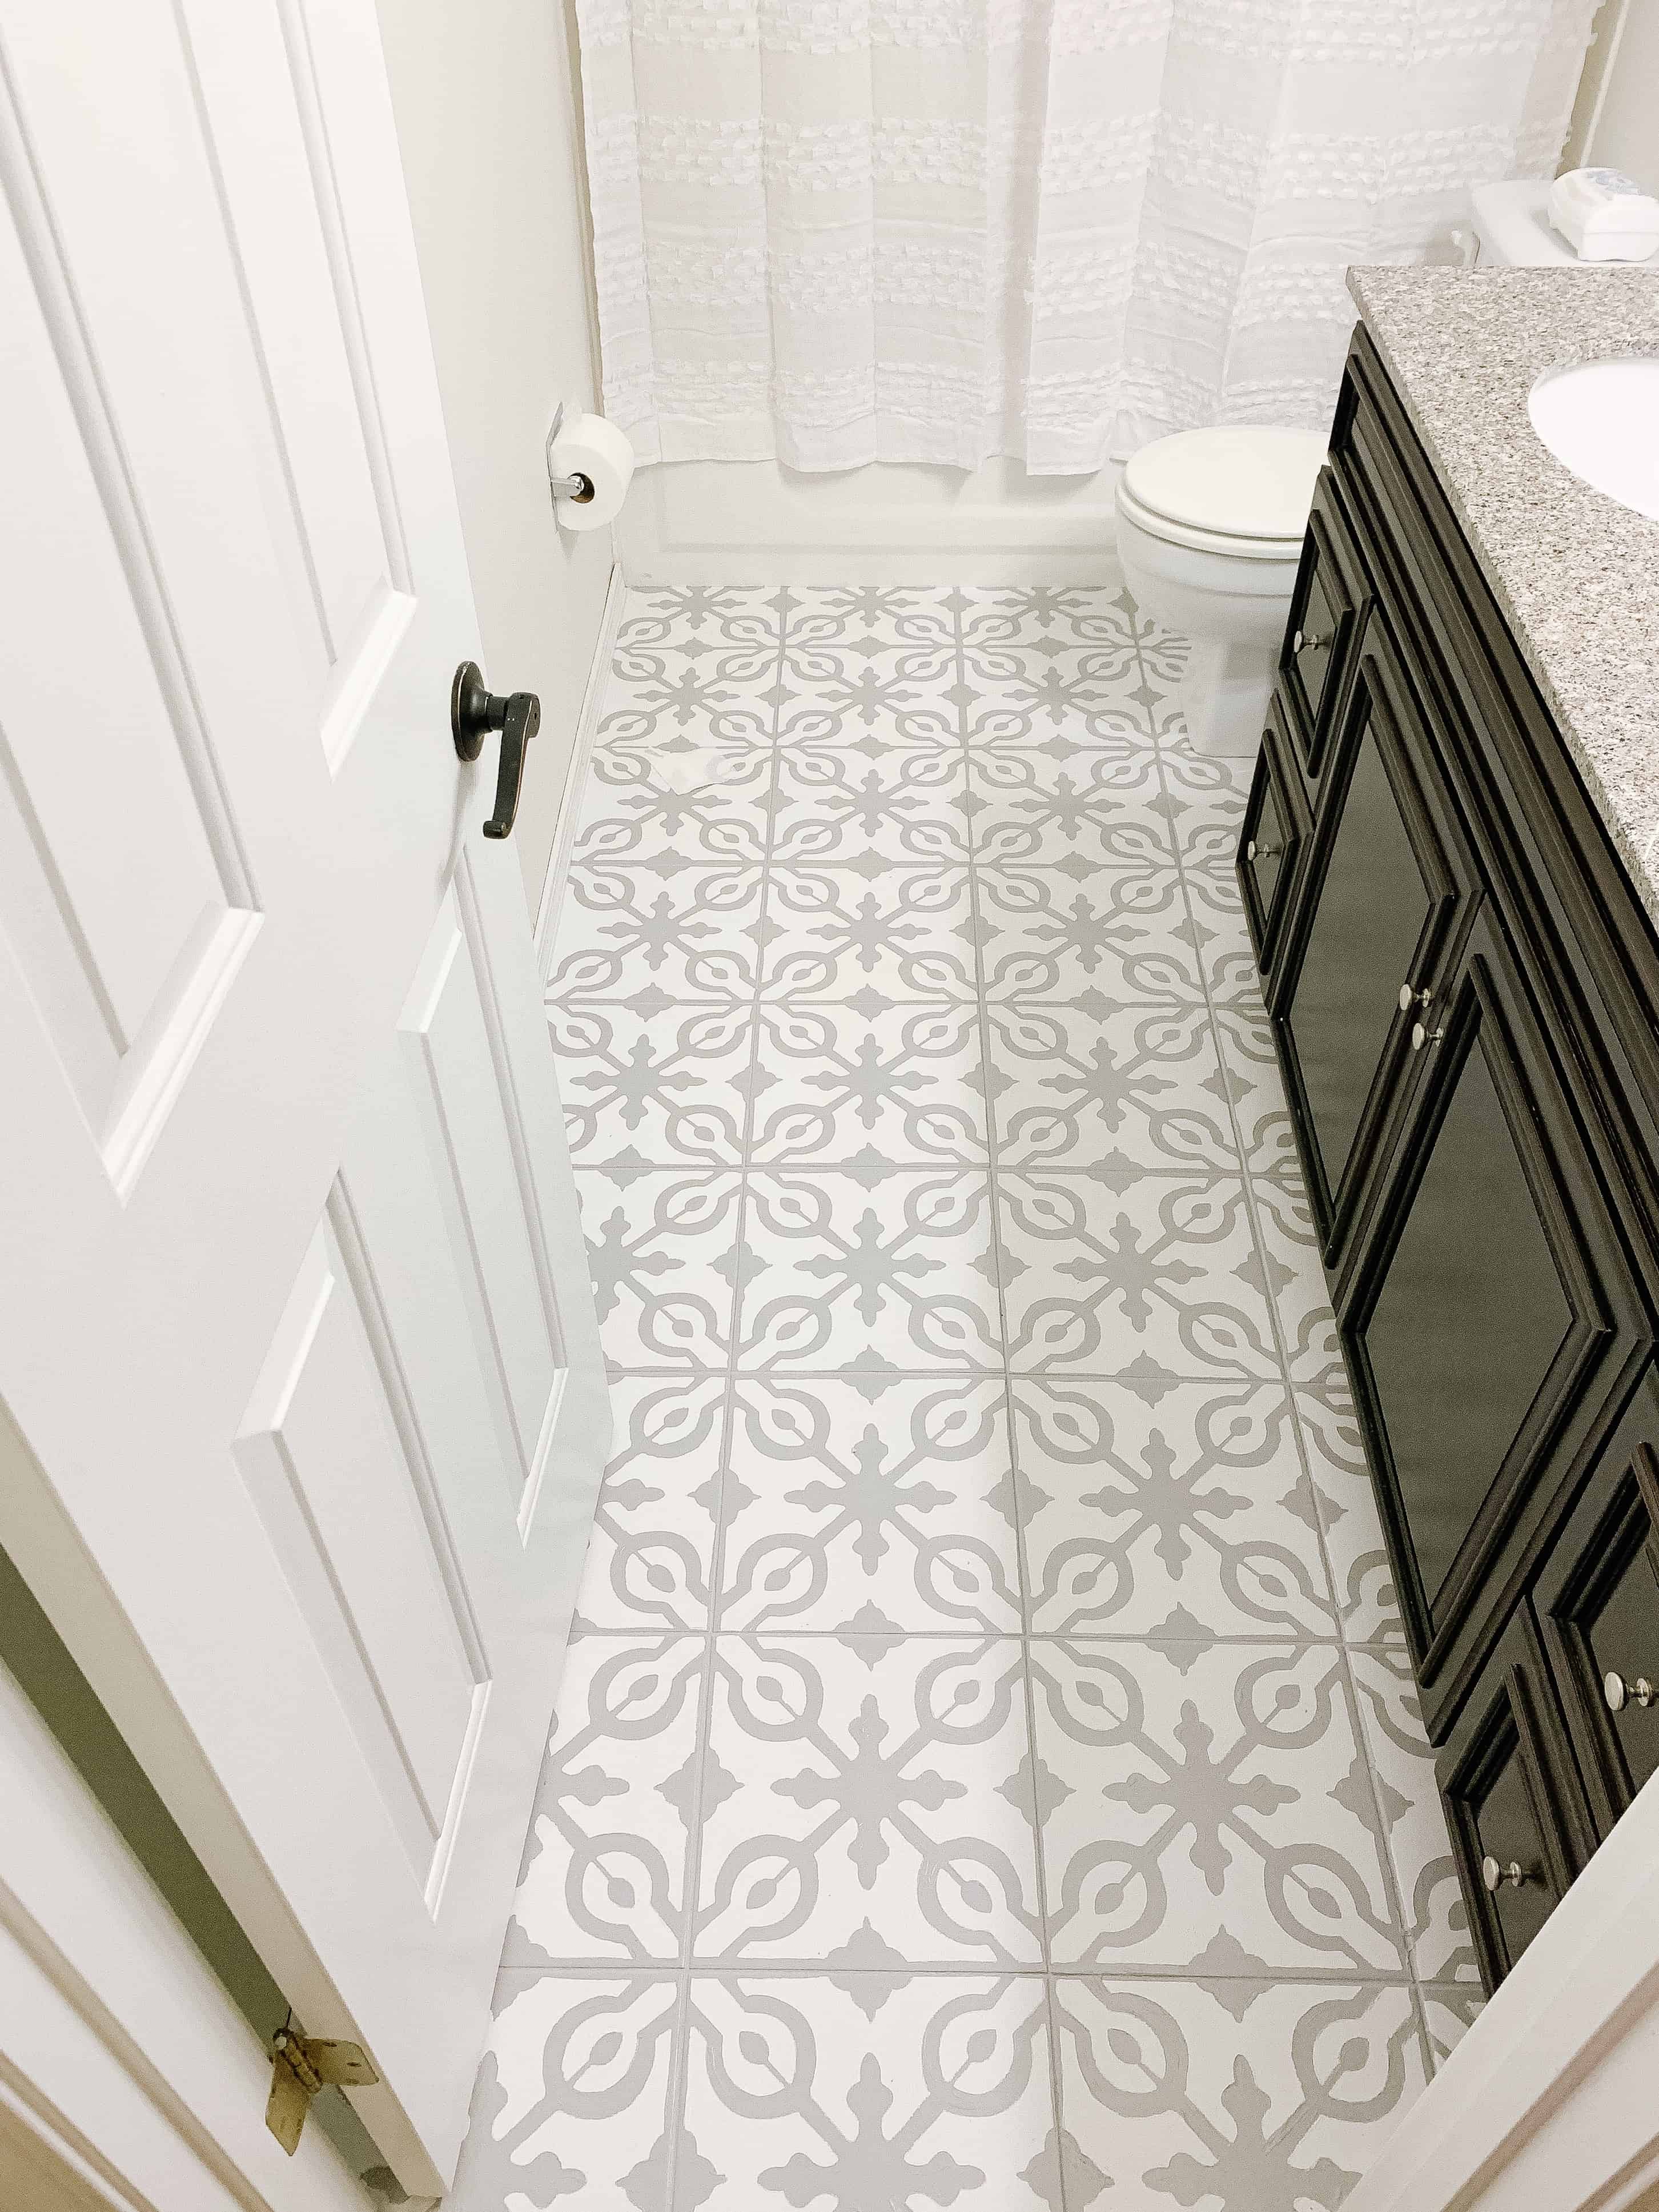 How To Paint Tile Floors, Paint Over Bathroom Tile Floor